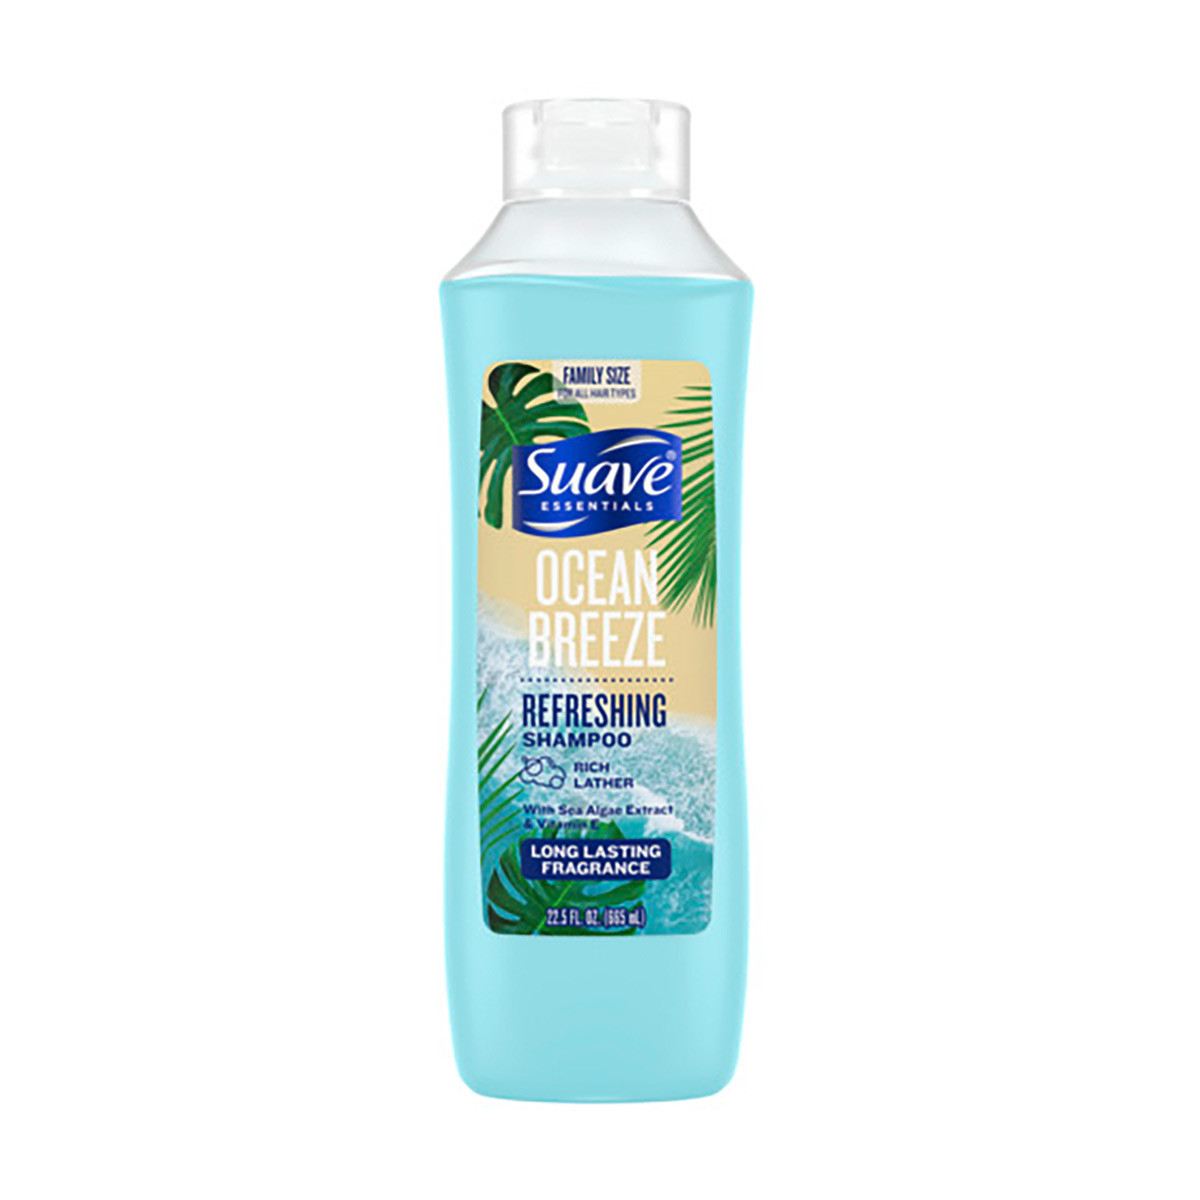 Suave Essentials Ocean Breeze Refreshing Shampoo